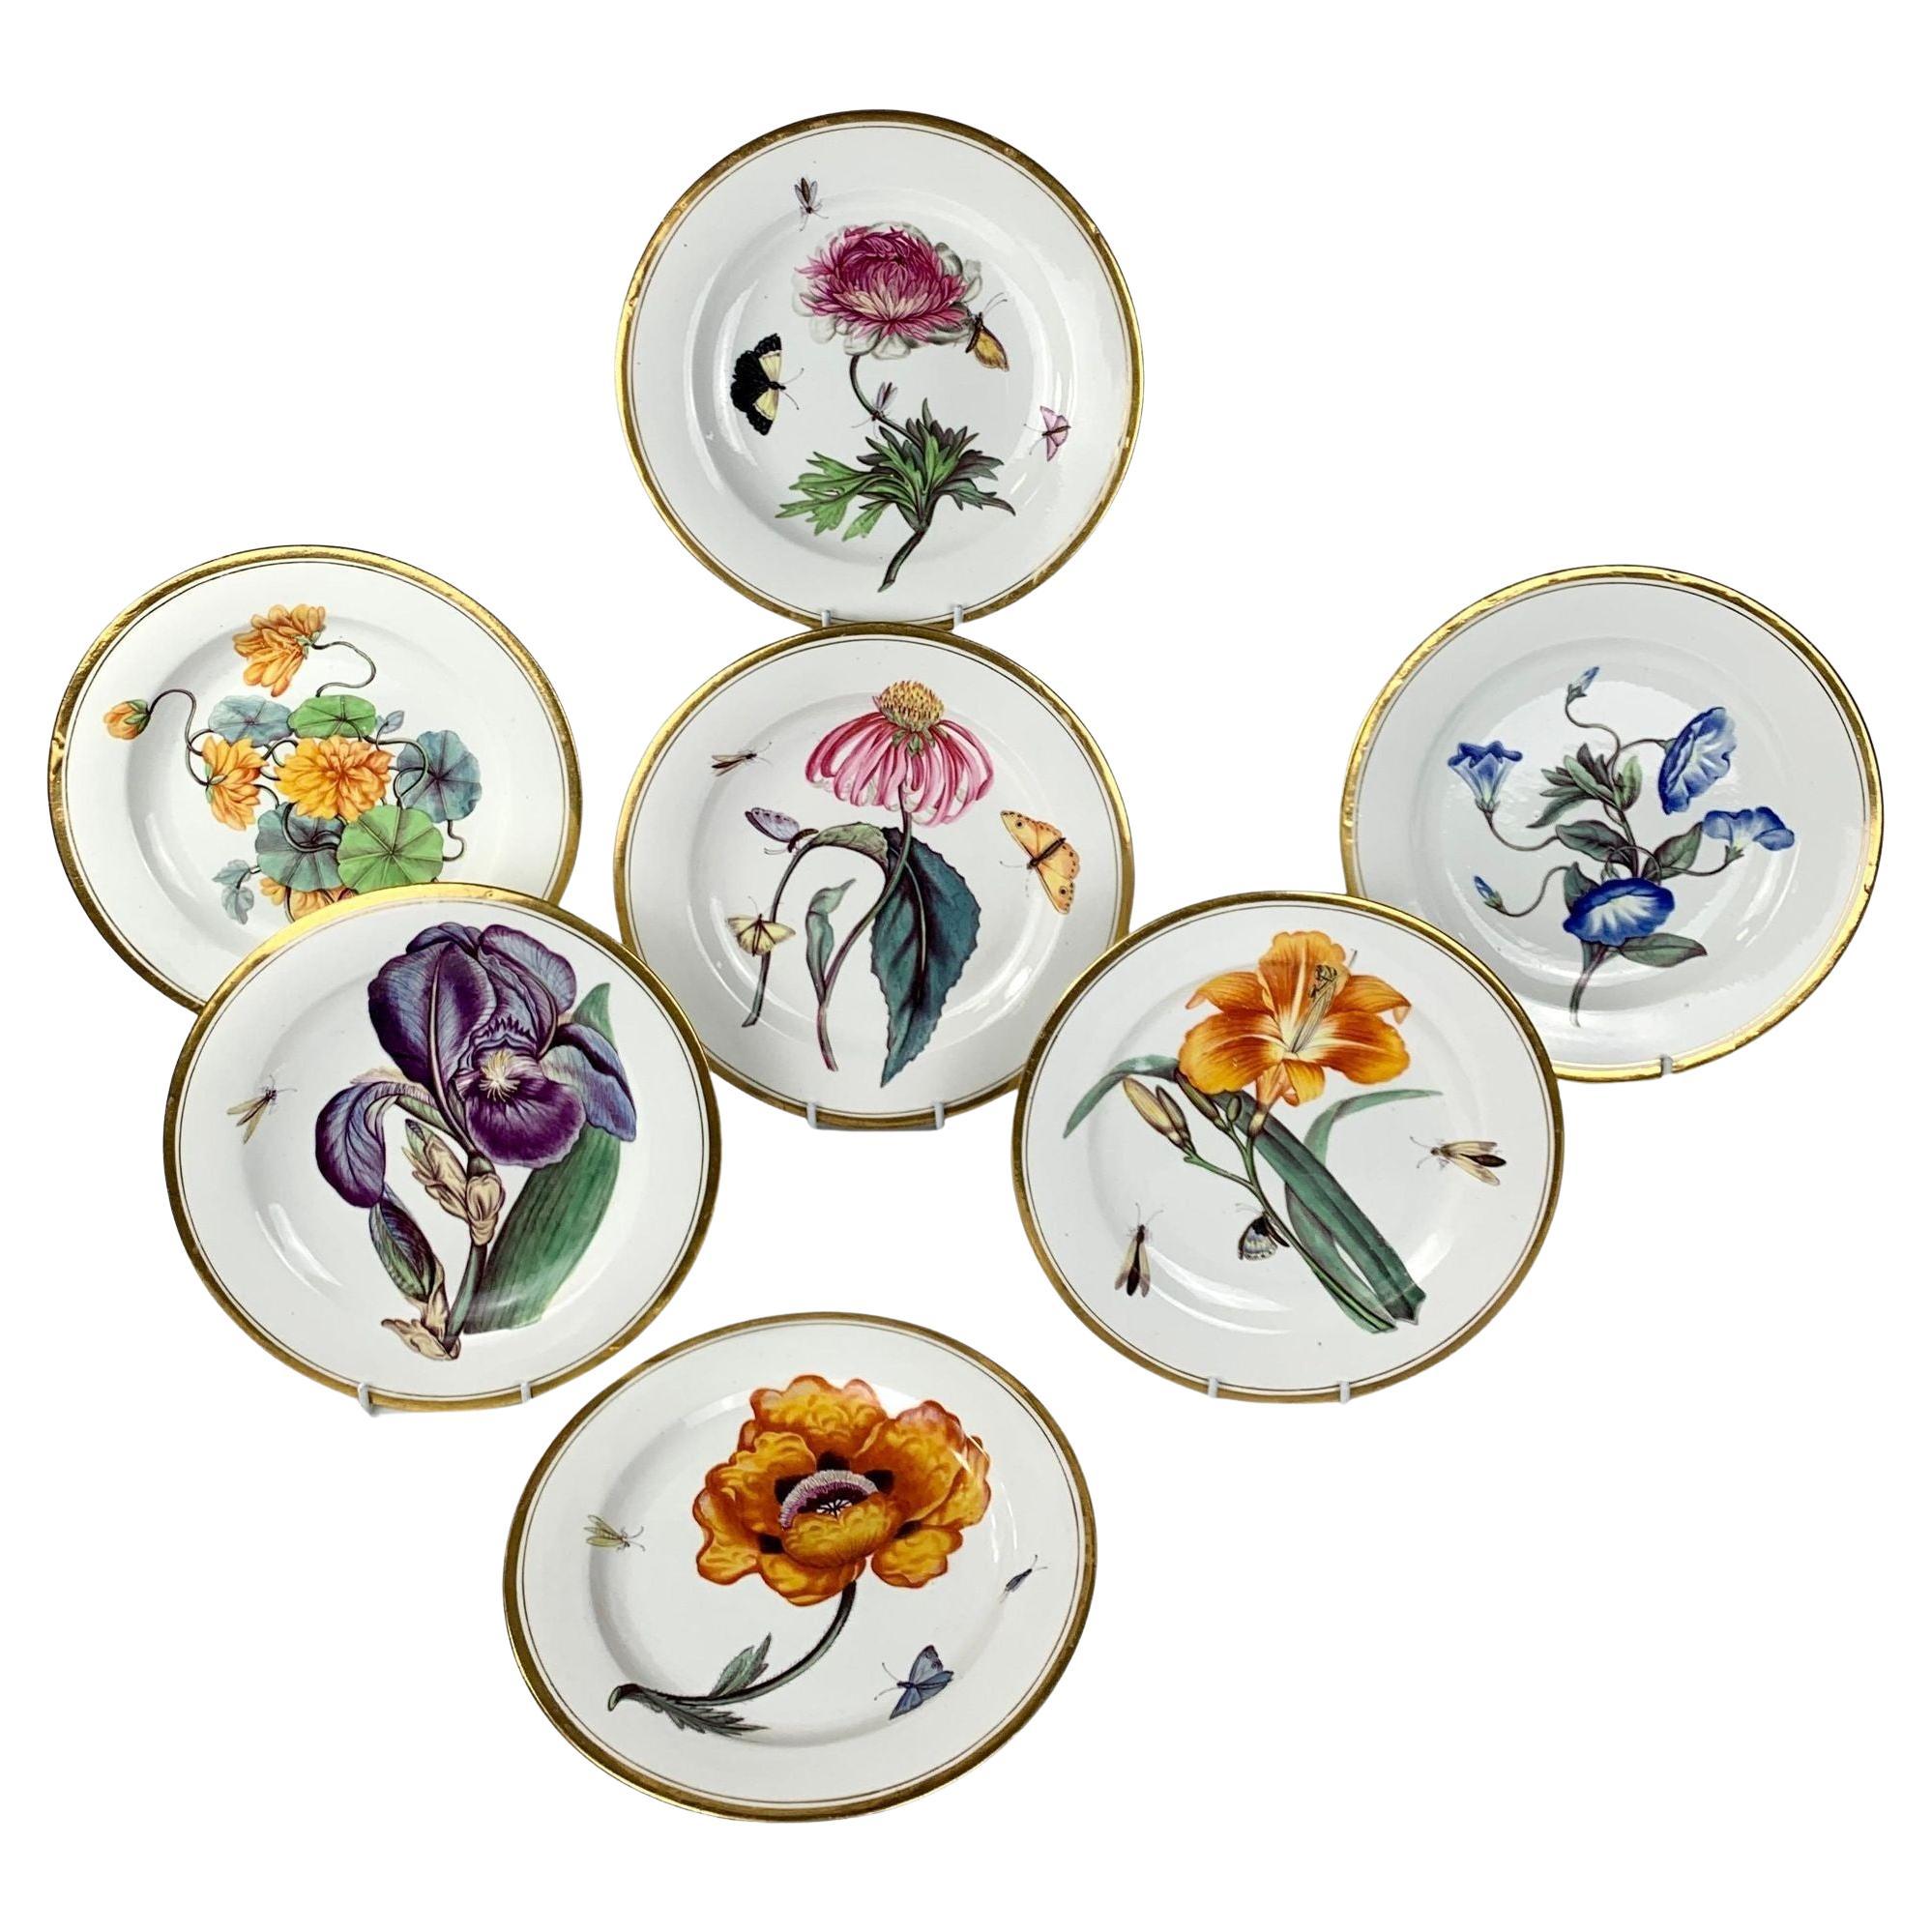 Seven Antique Porcelain Botanical Cabinet Plates Made by Minton Circa 1825